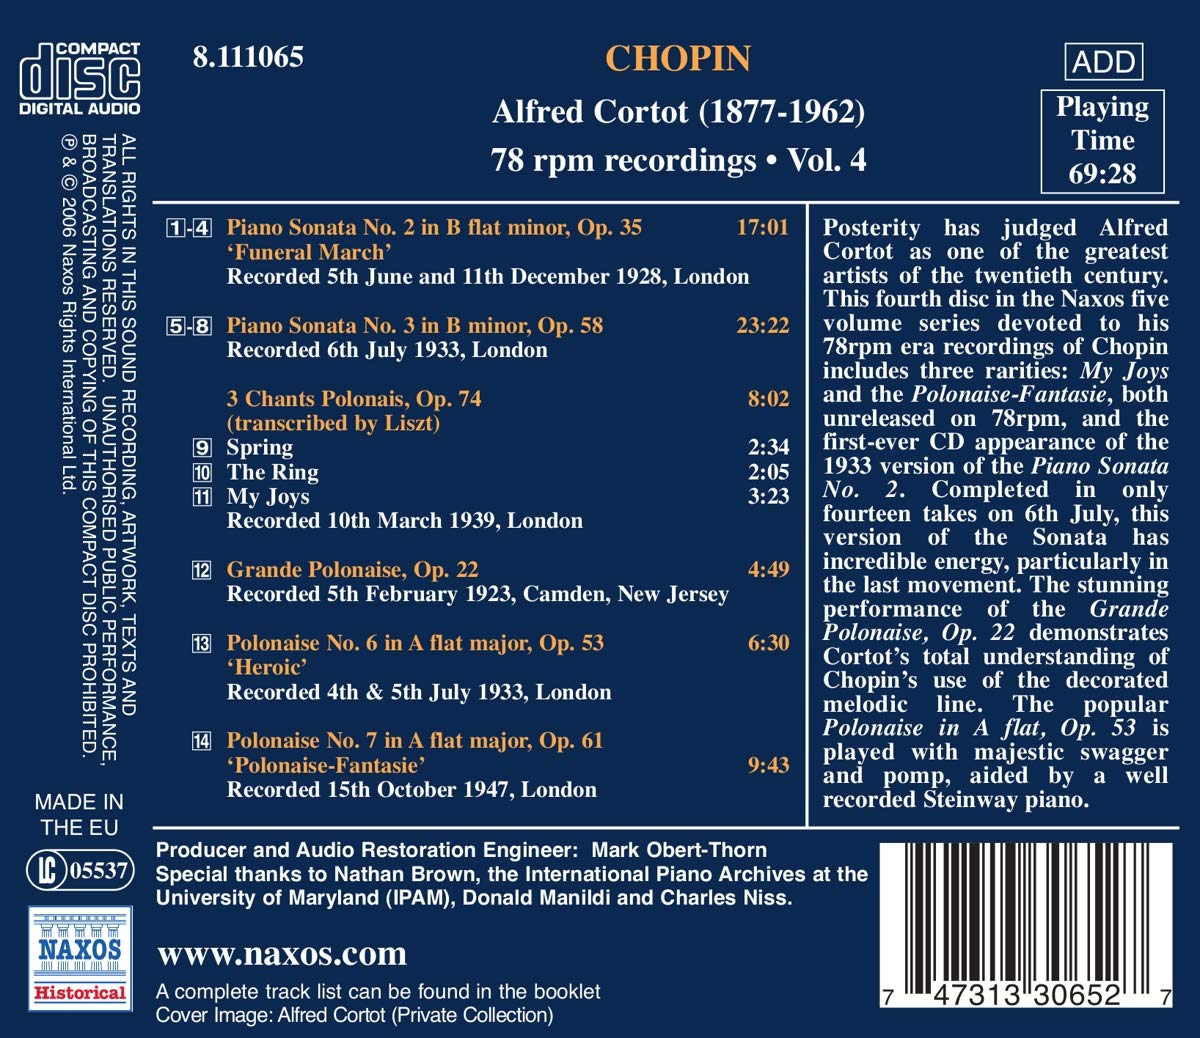 Alfred Cortot 쇼팽: 피아노 소나타 2, 3번, 폴로네이즈 (1923-47년 녹음) (Chopin: Piano Sonatas Op.35, Op.58, Polonaises) 